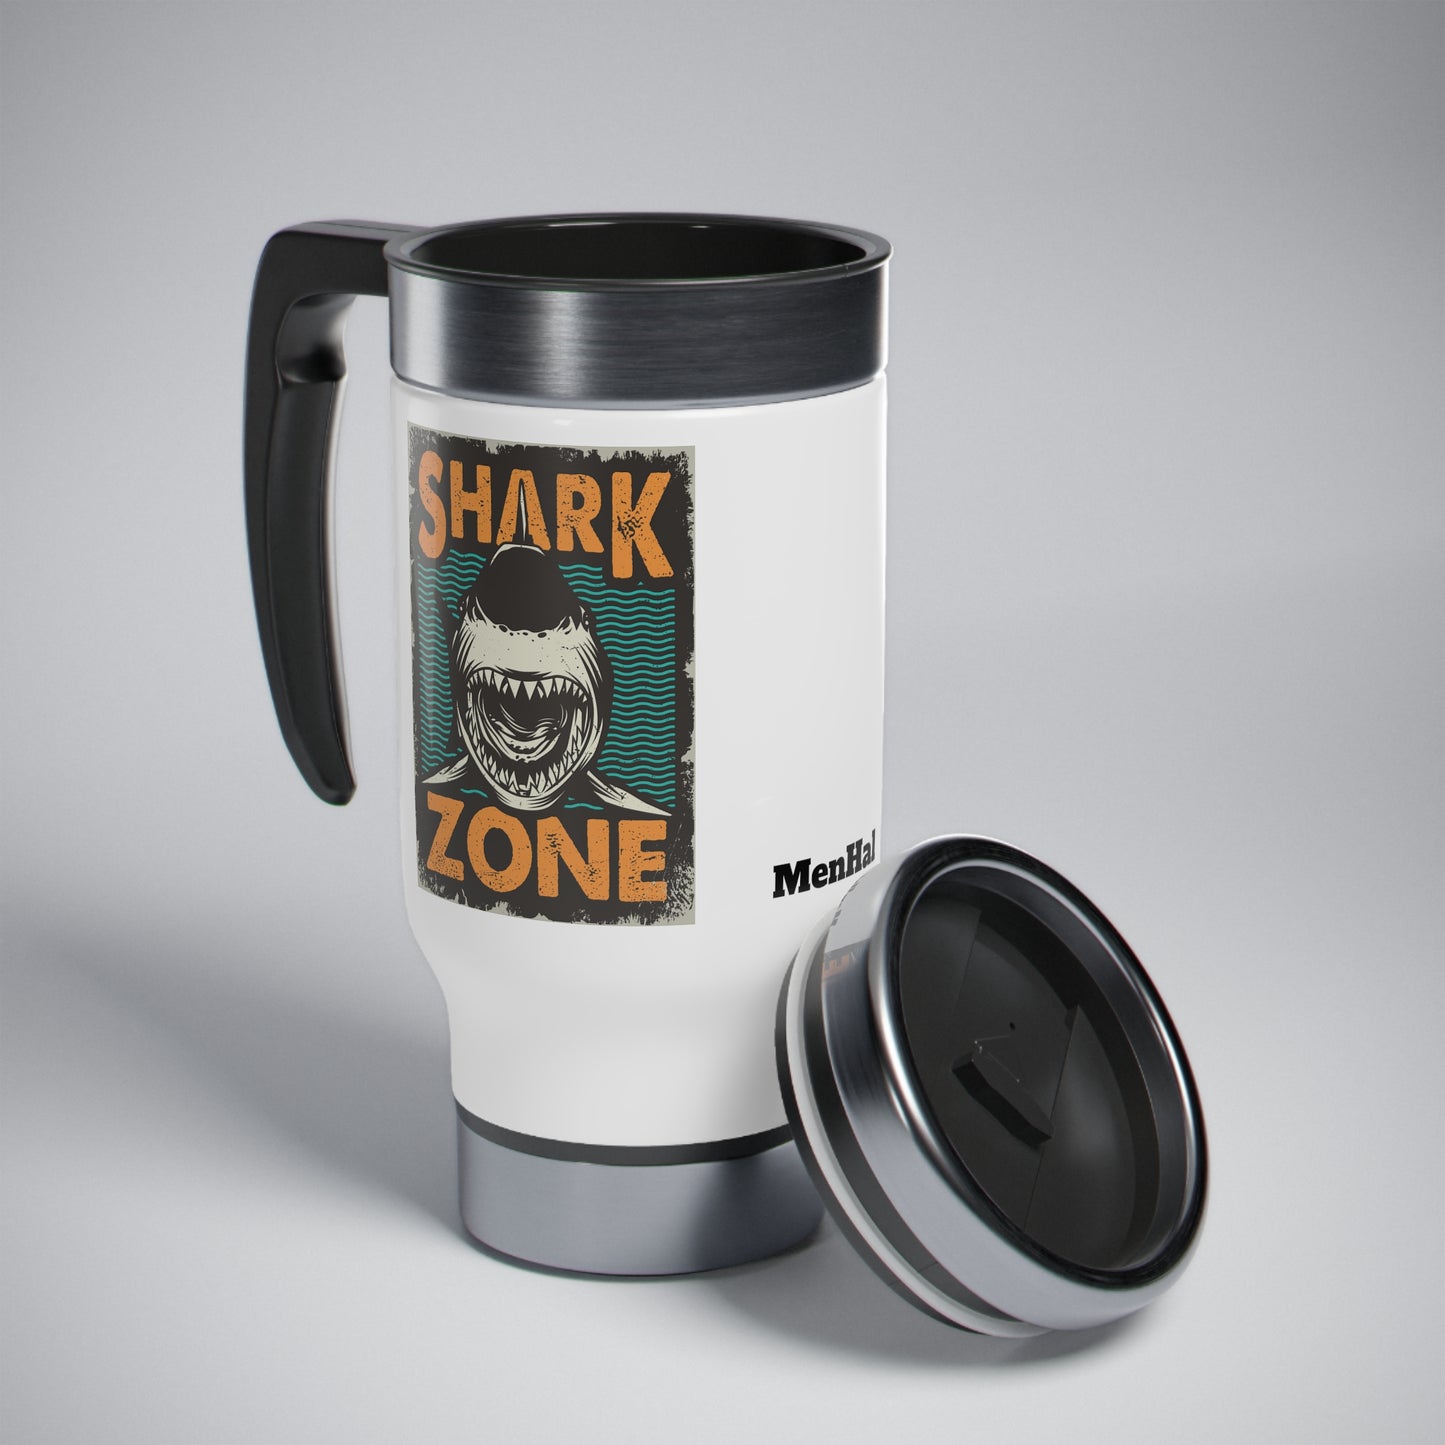 Shark zone - Stainless Steel Travel Mug with Handle, 14oz